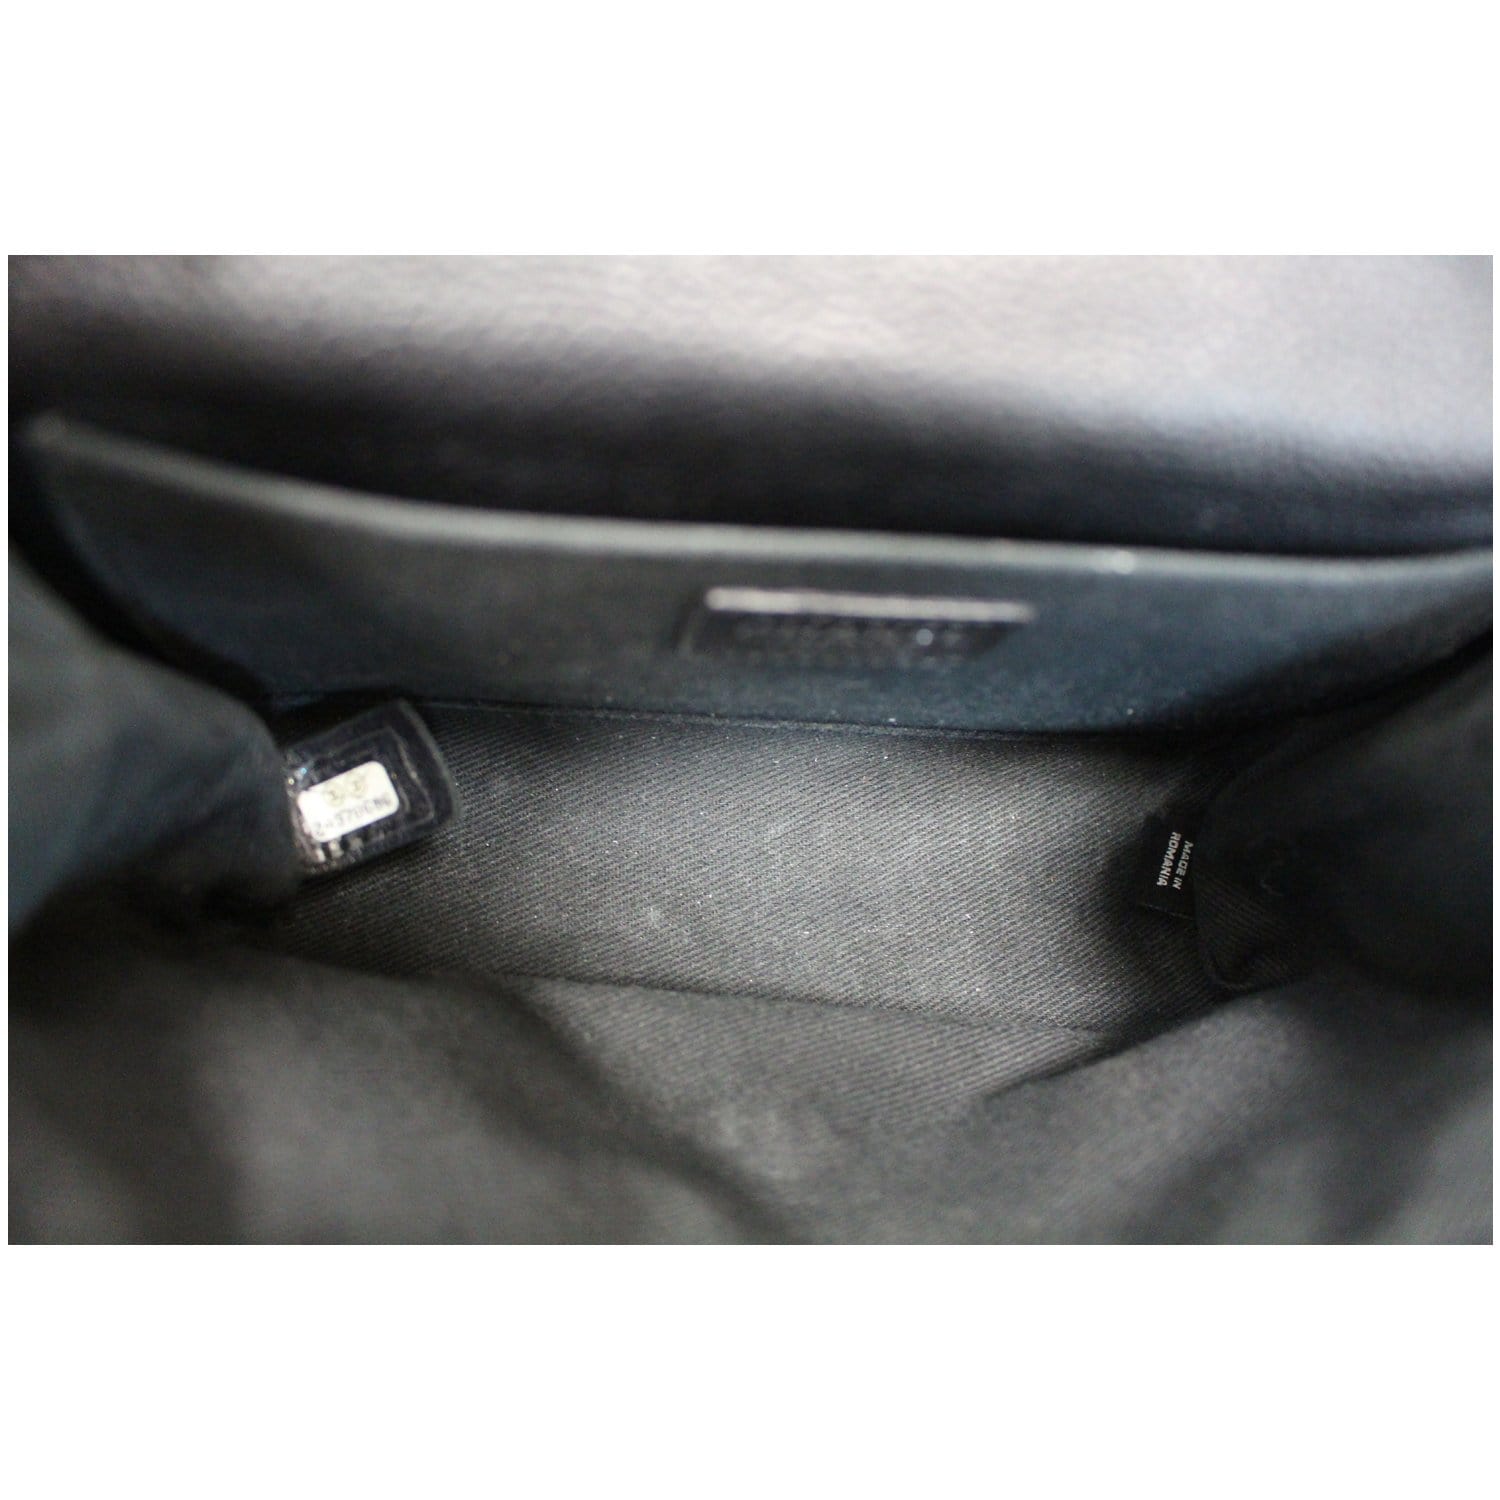 Chanel 2.55 Reissue Flap Grained Leather Waist Belt Bag